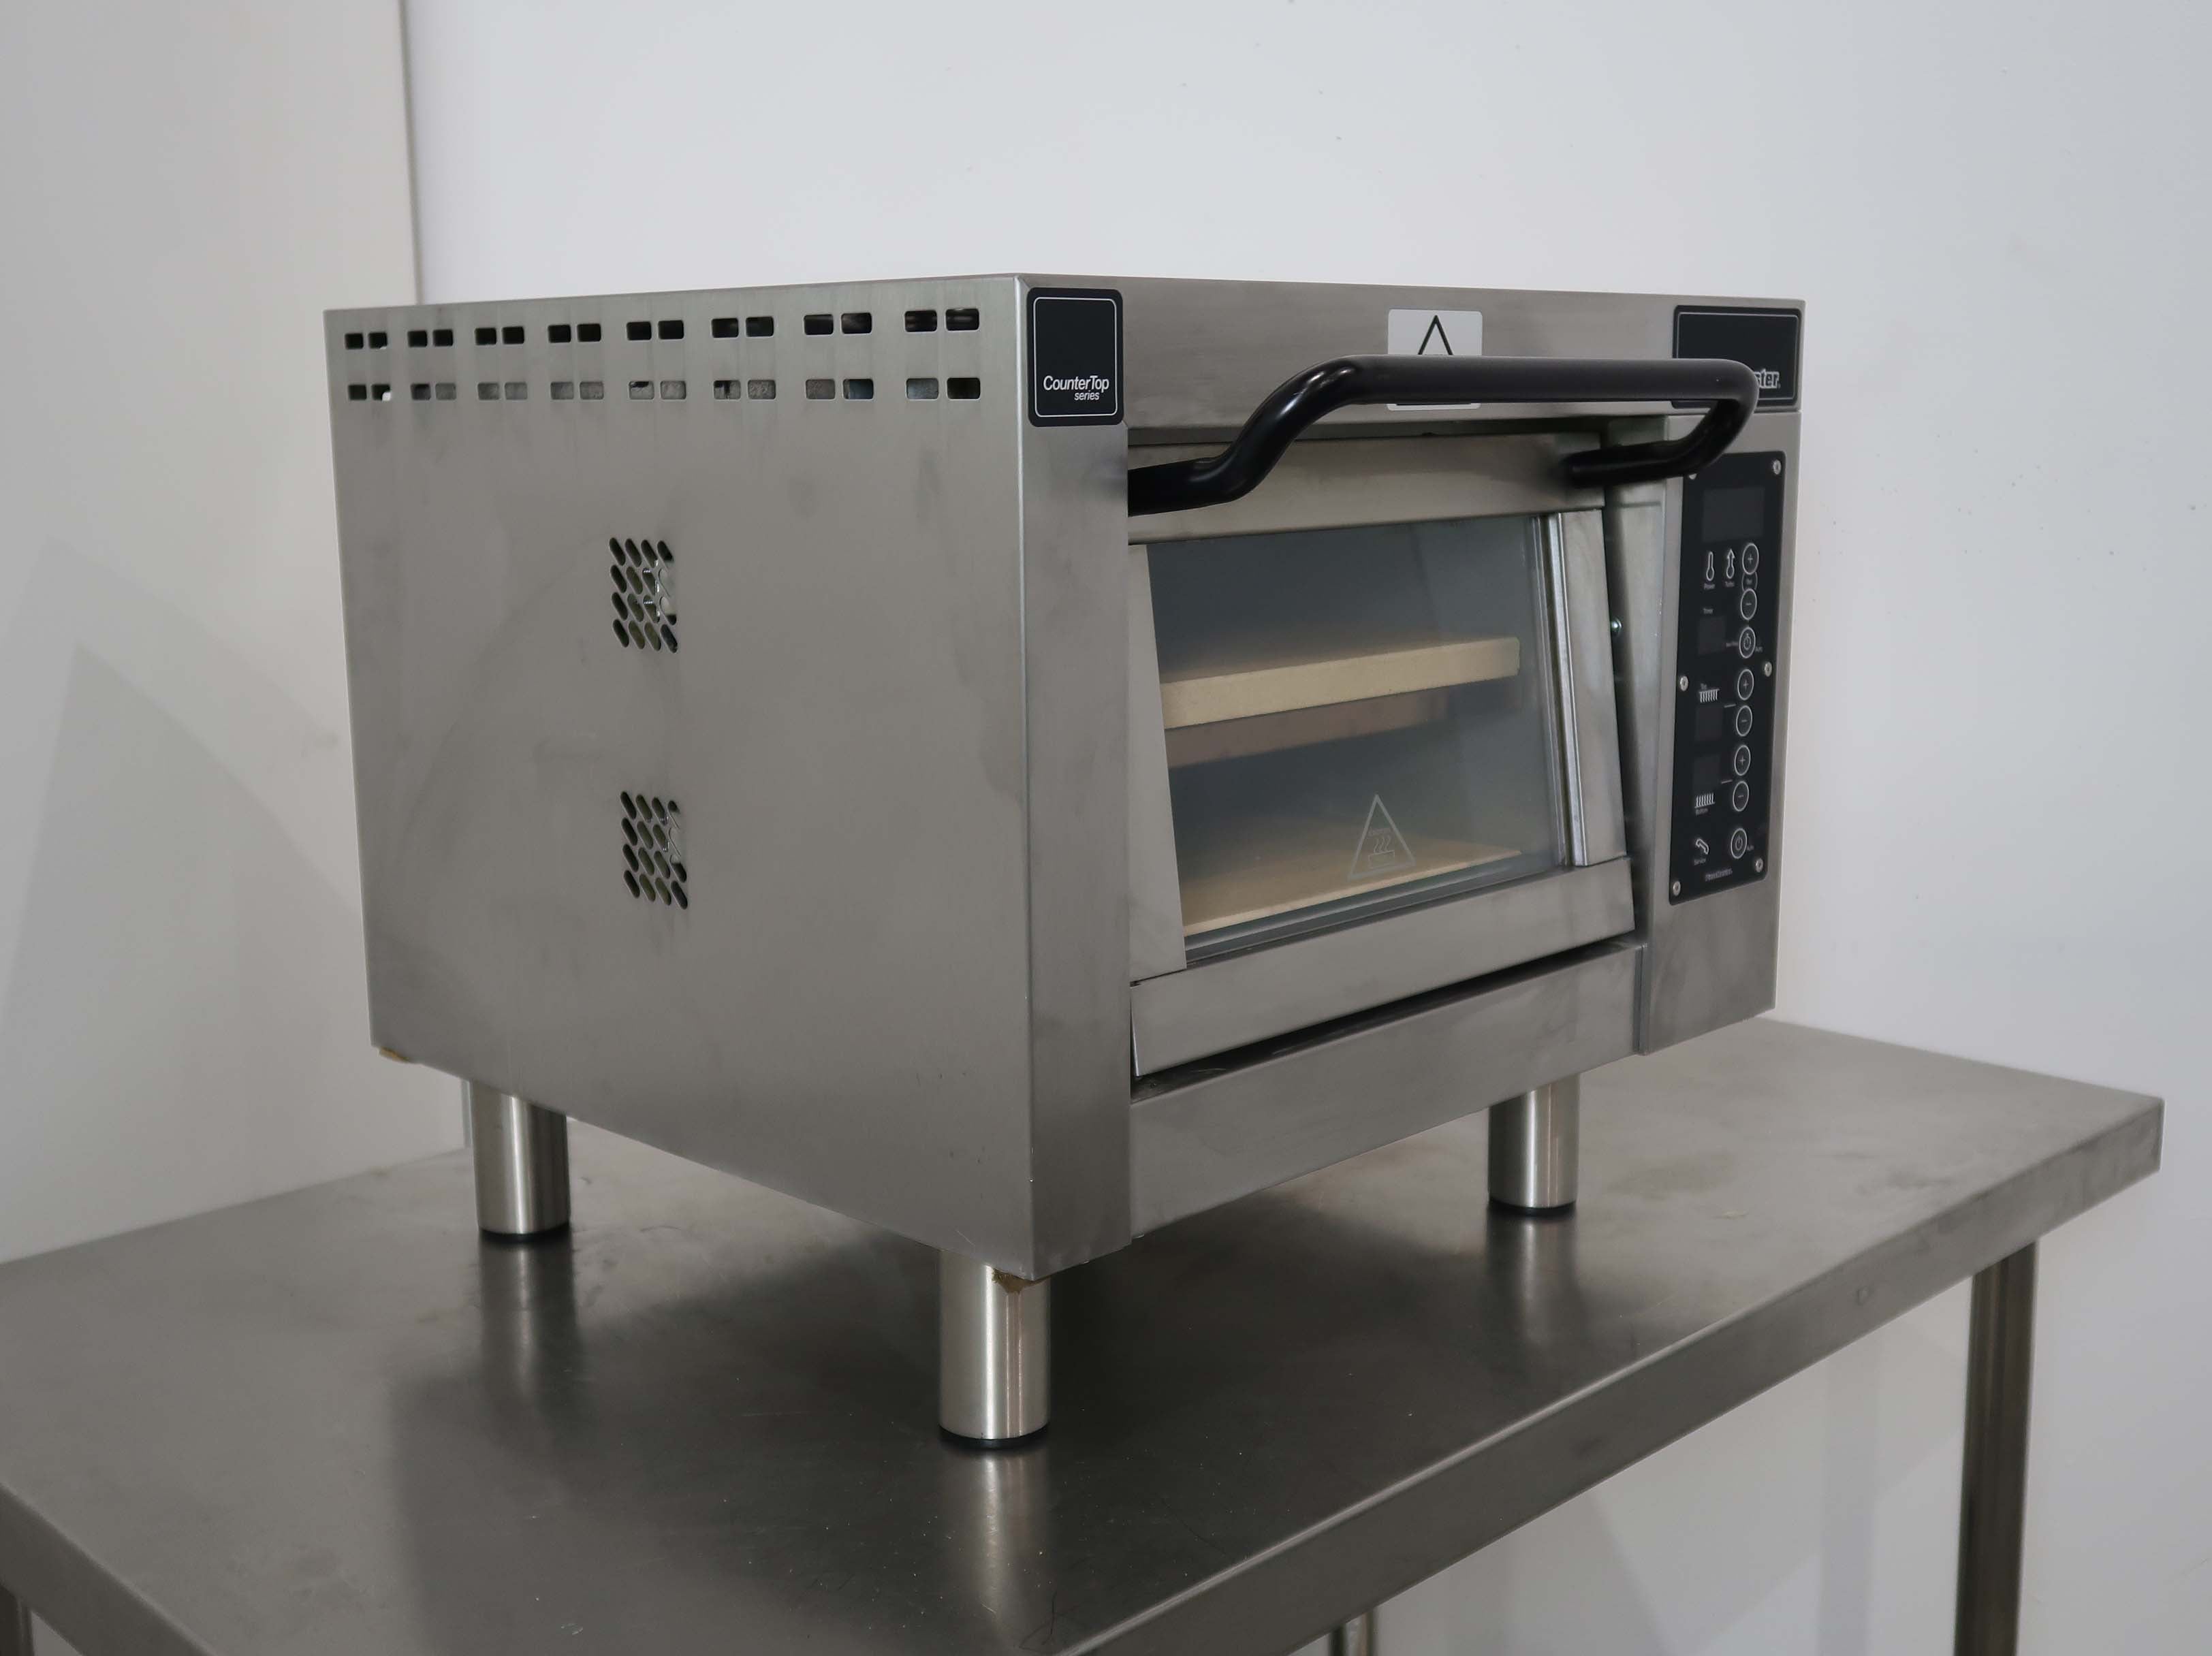 Thumbnail - PizzaMaster PM 351ED-1 - Deck Oven